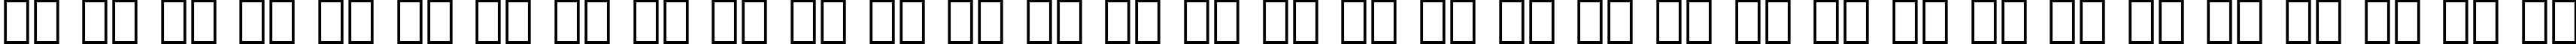 Пример написания русского алфавита шрифтом Zurich Bold Extended BT